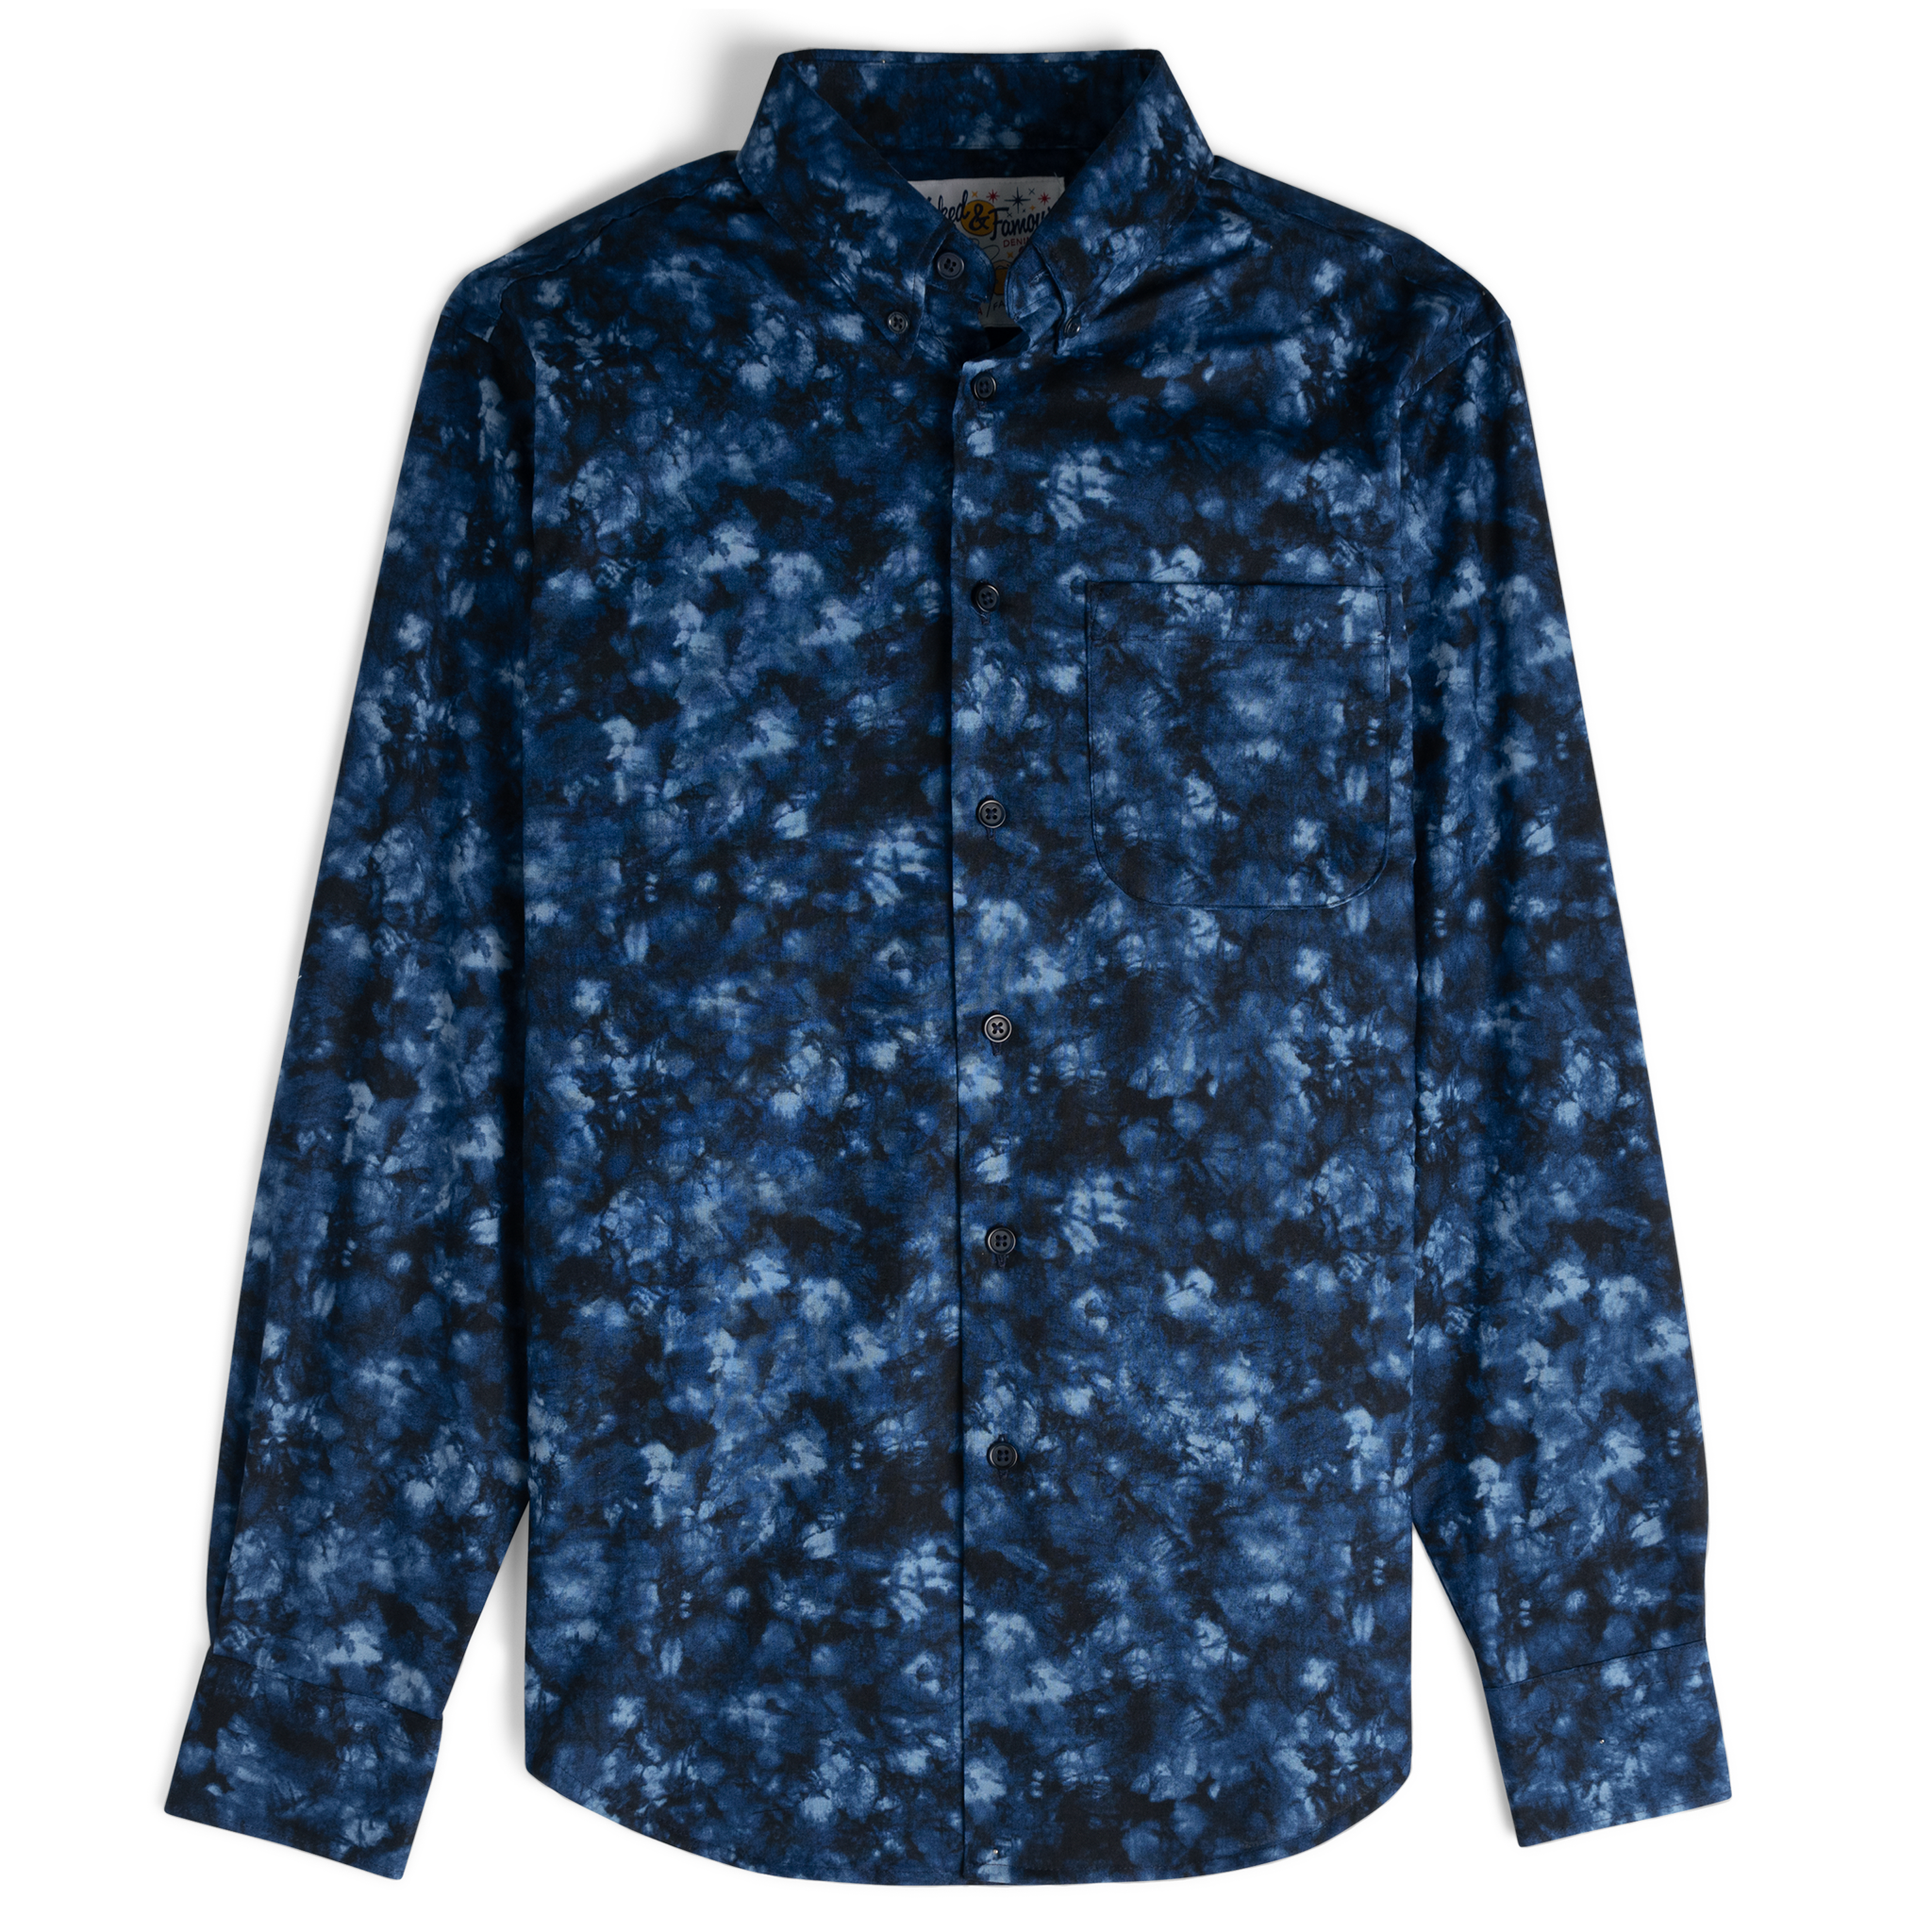  Easy Shirt - Tie Dye Print - Dark Blue - flat front 